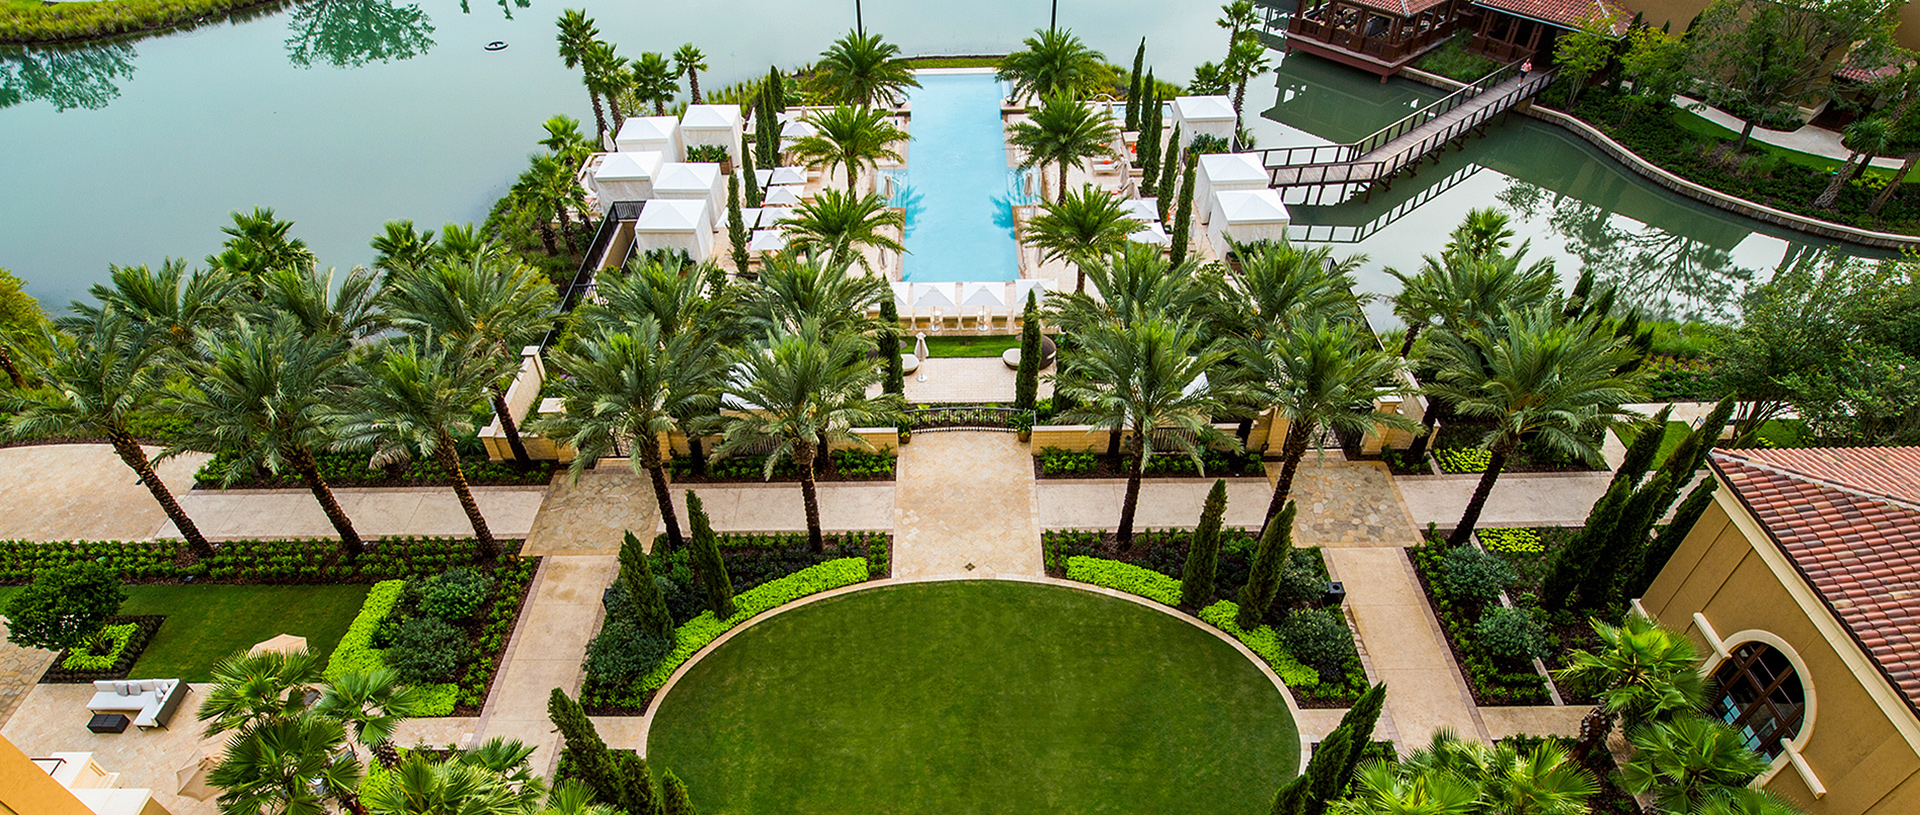 ©EDSA | Four Seasons Resort Orlando at Walt Disney World |  Aerial View of Pool, Lake and Garden